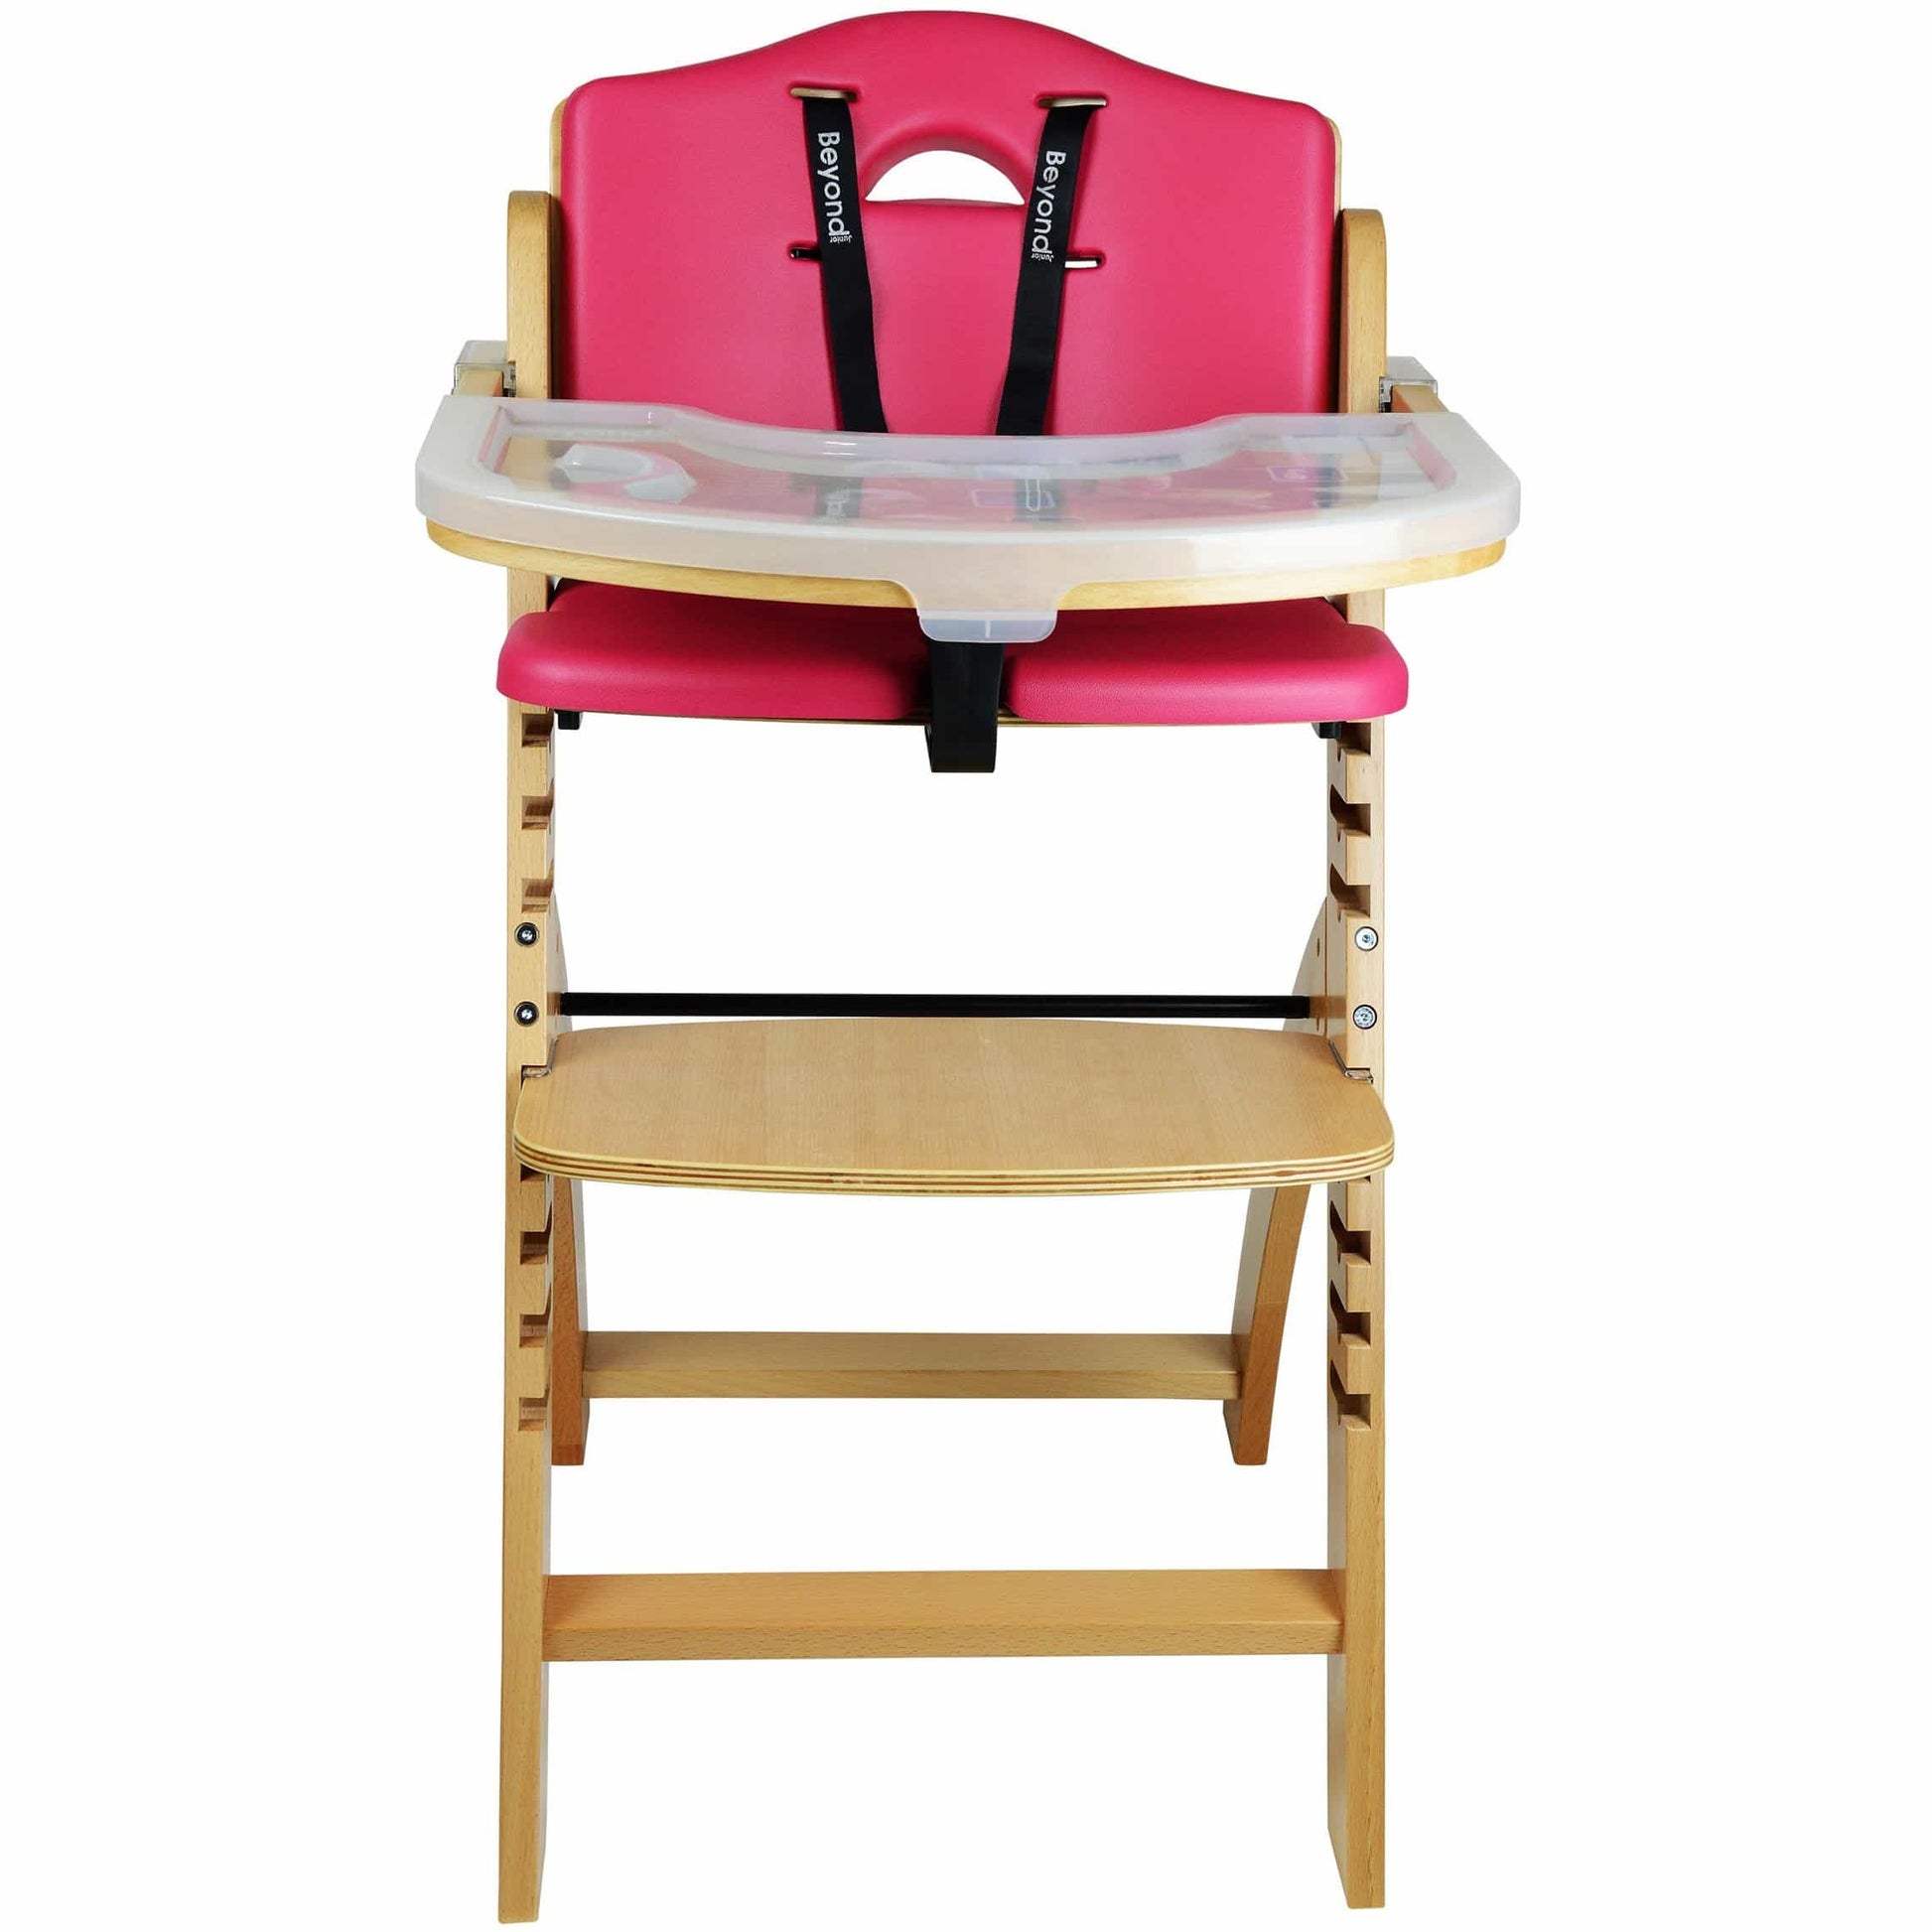 Compact fold baby chair